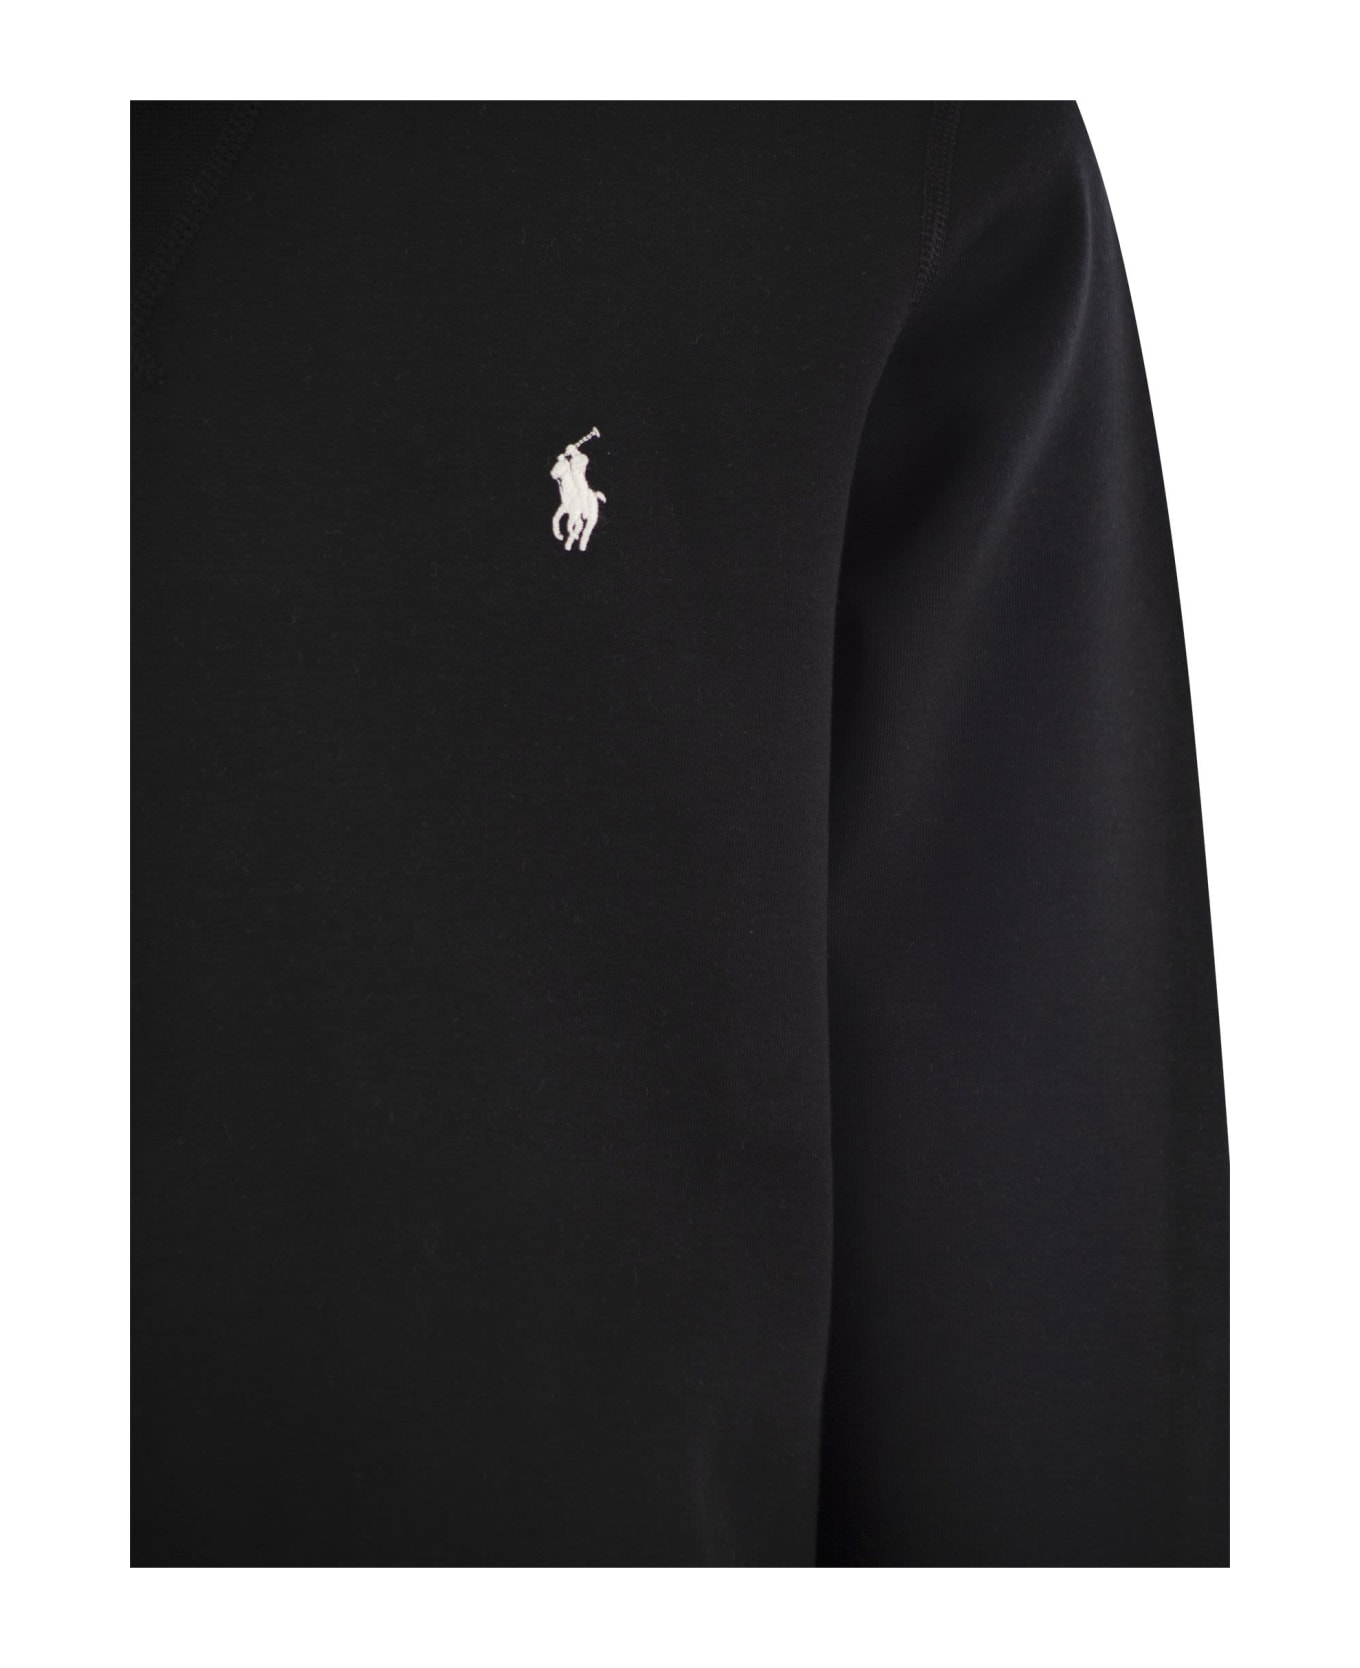 Polo Ralph Lauren Double Knit Crew Neck Sweatshirt - Black